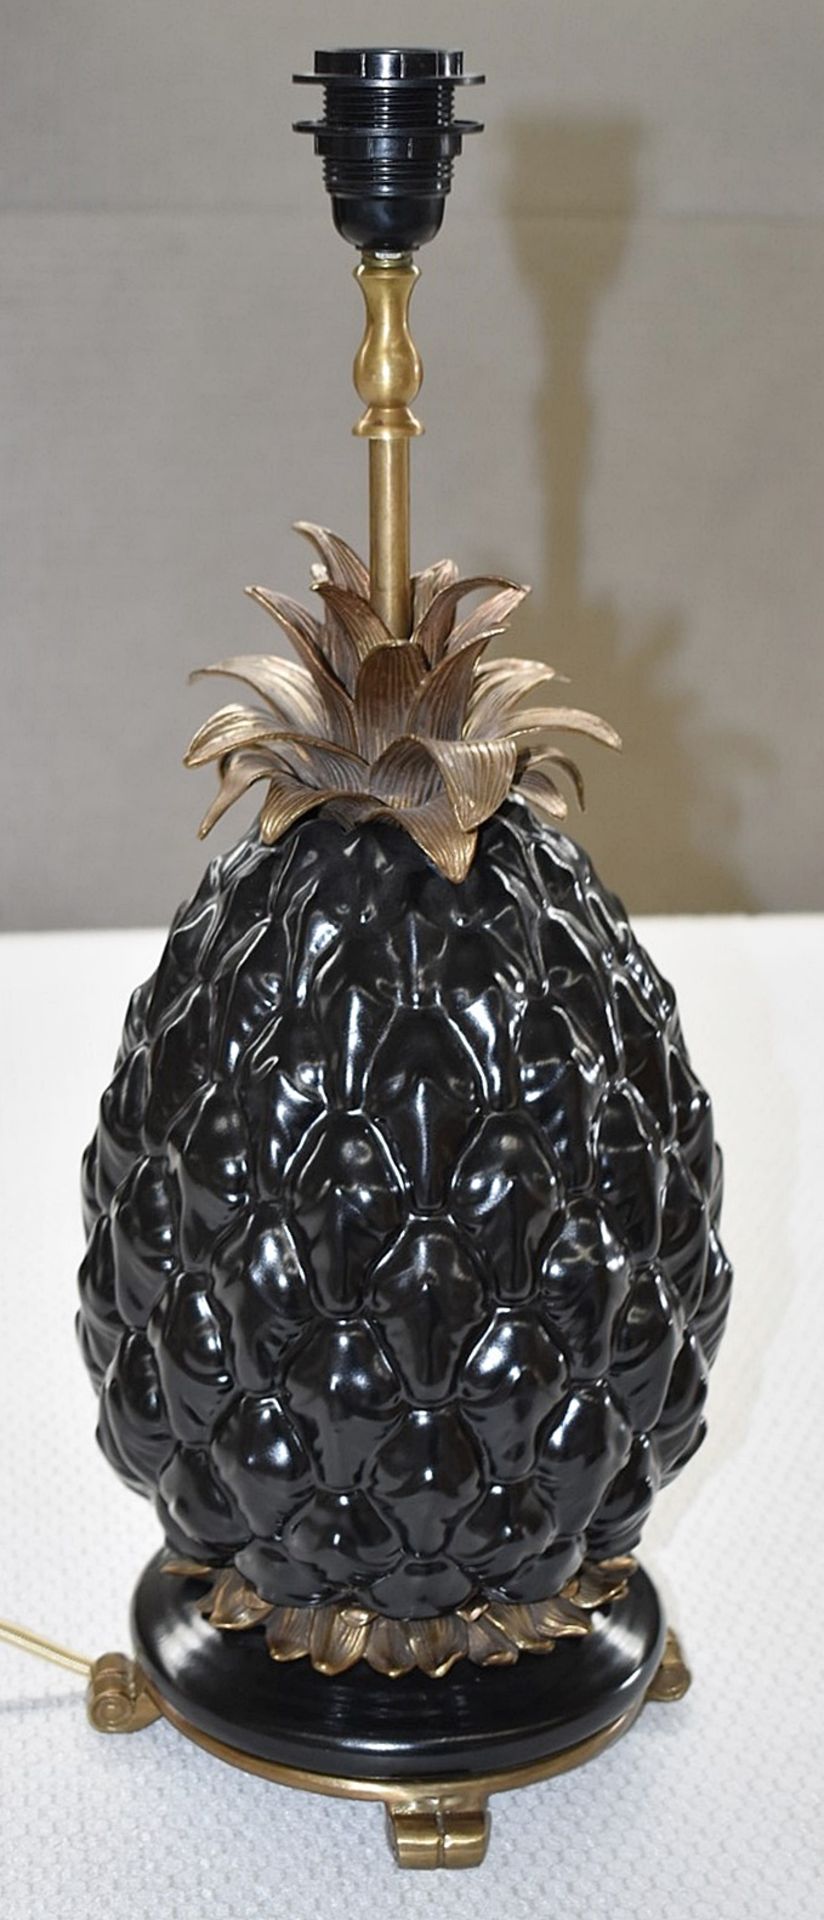 1 x HOUSE OF HACKNEY 'Ananas' Ceramic Pineapple Lamp Stand In Black - Original RRP £545.00 - Image 4 of 8